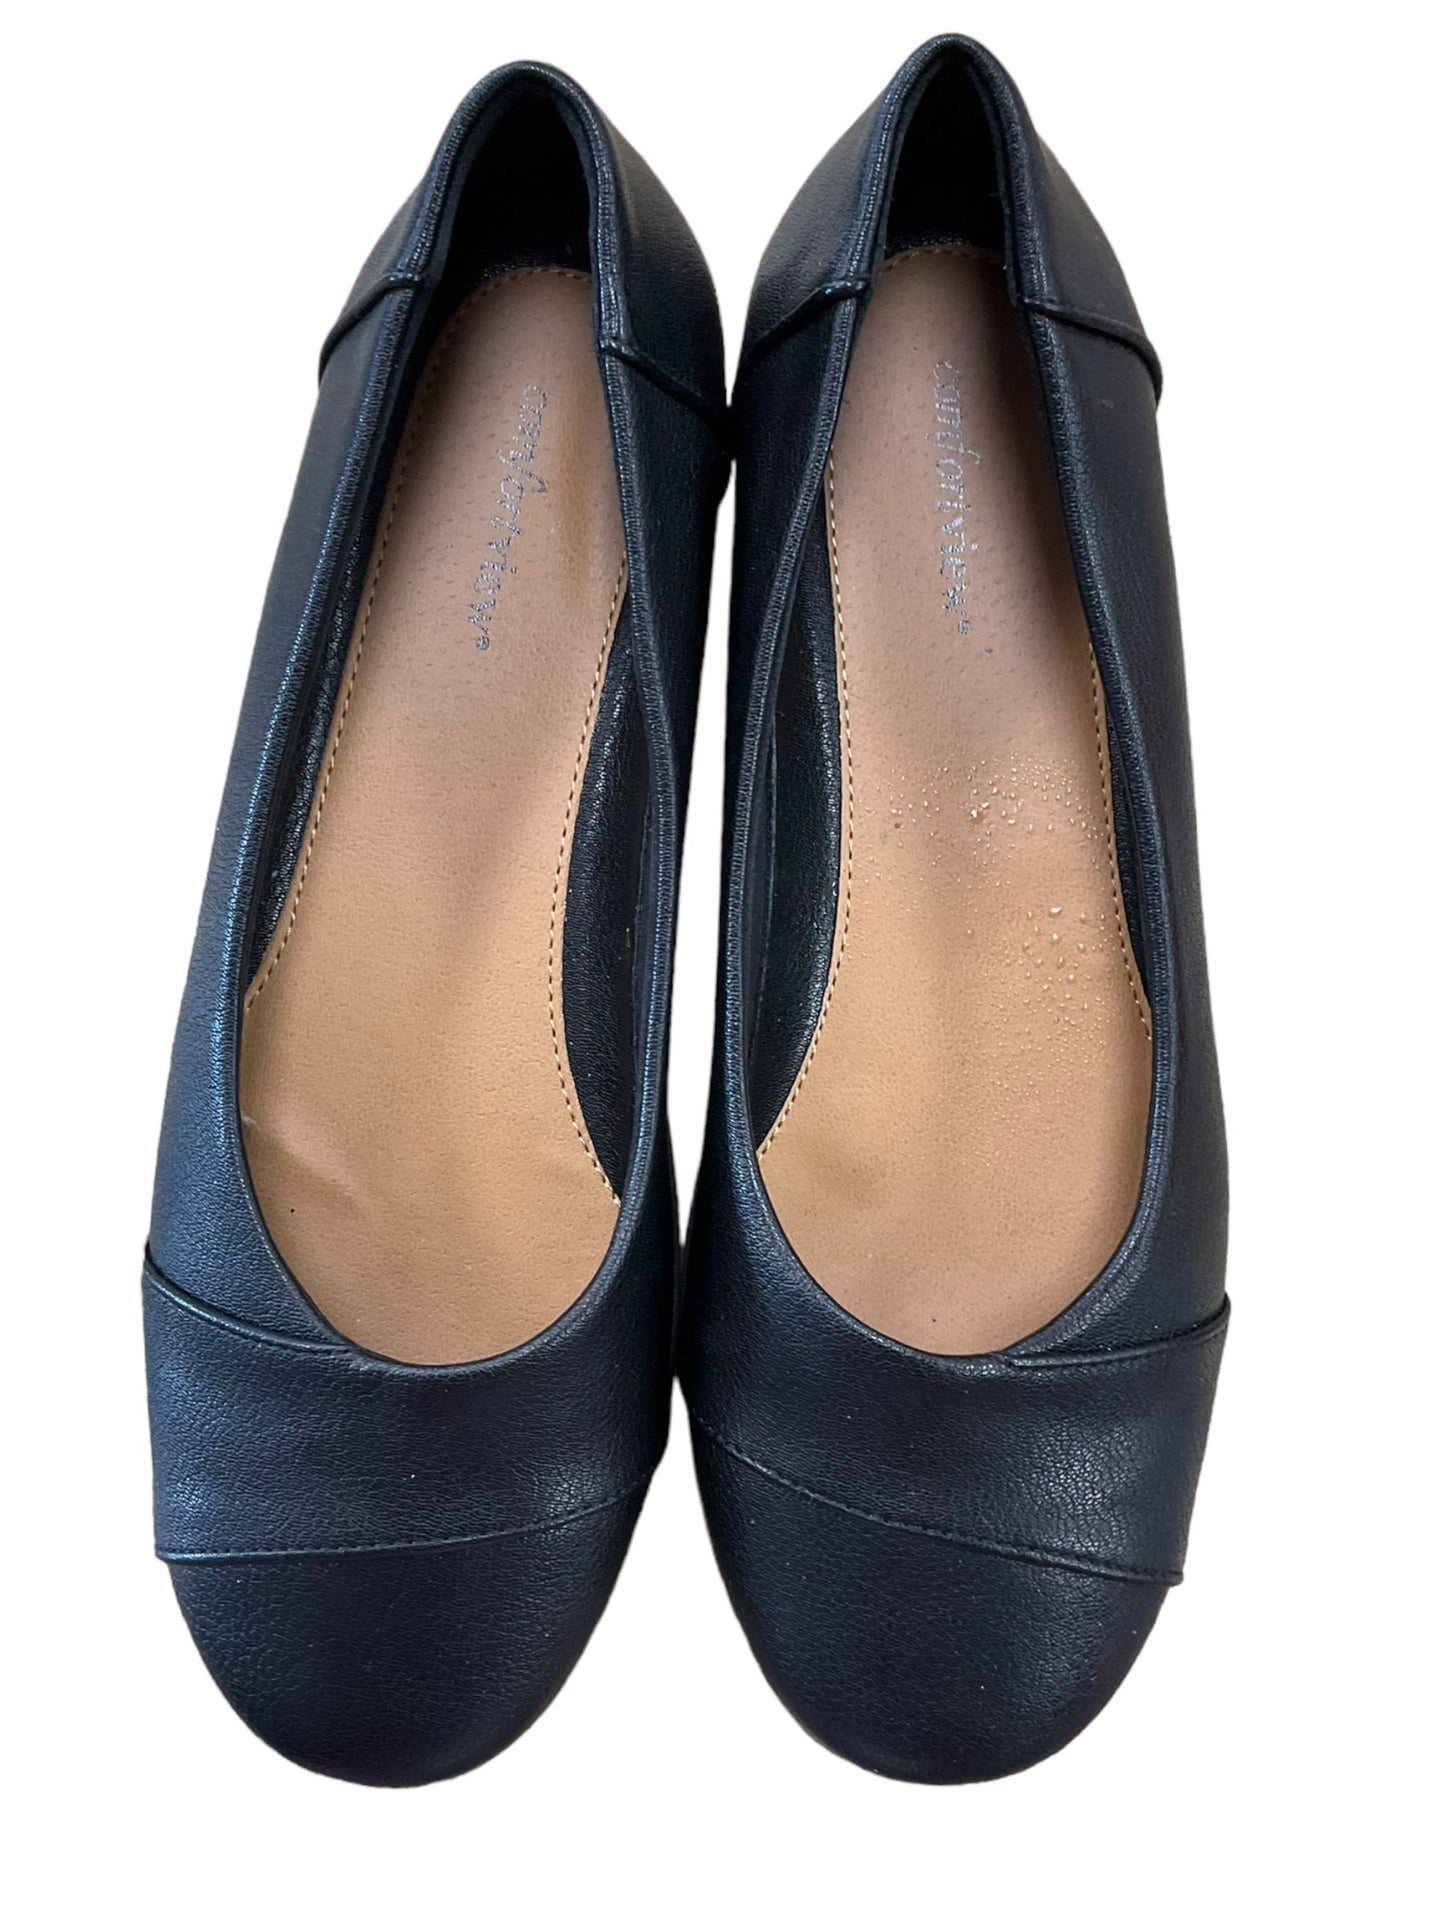 Black Shoes Flats Comfortview, Size 10.5